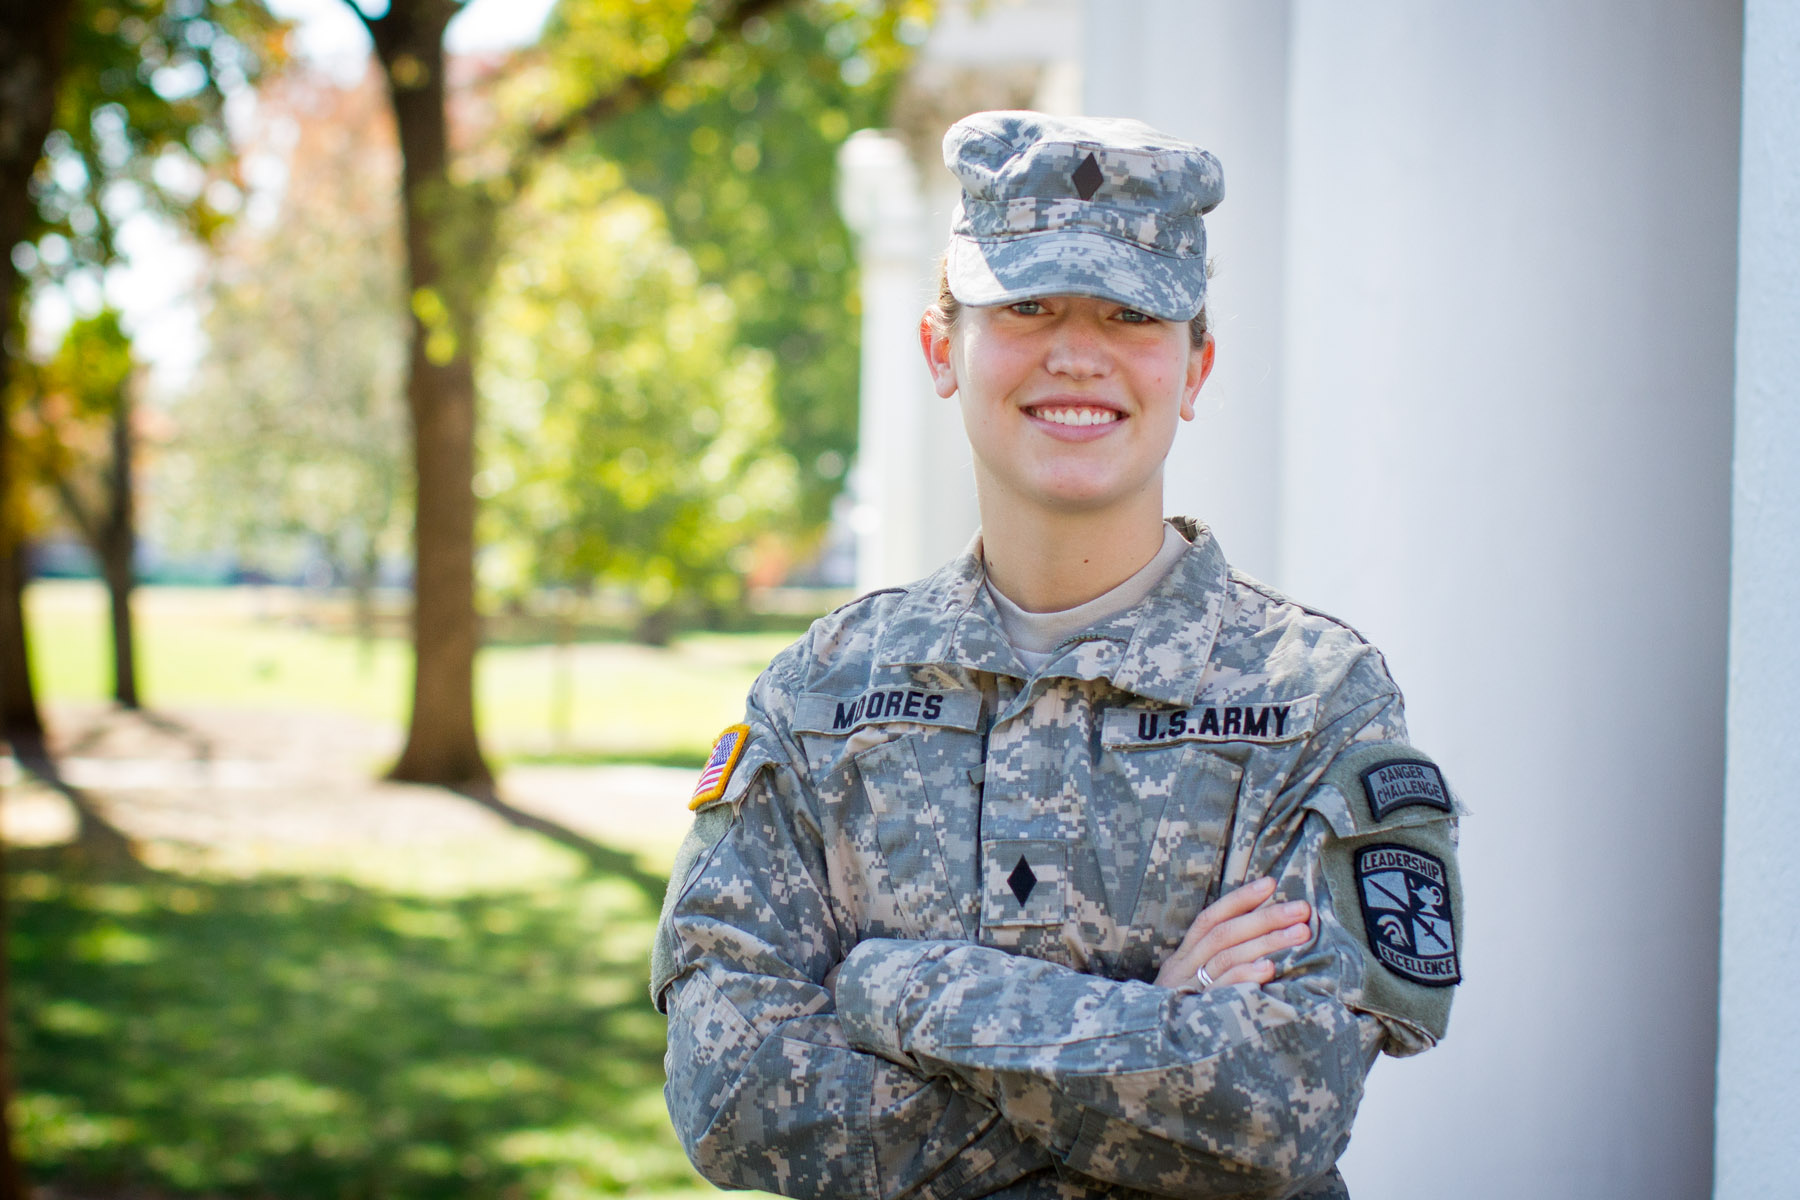 U.S. Army Cadet Maj. Aimee Moores headshot in US Army uniform